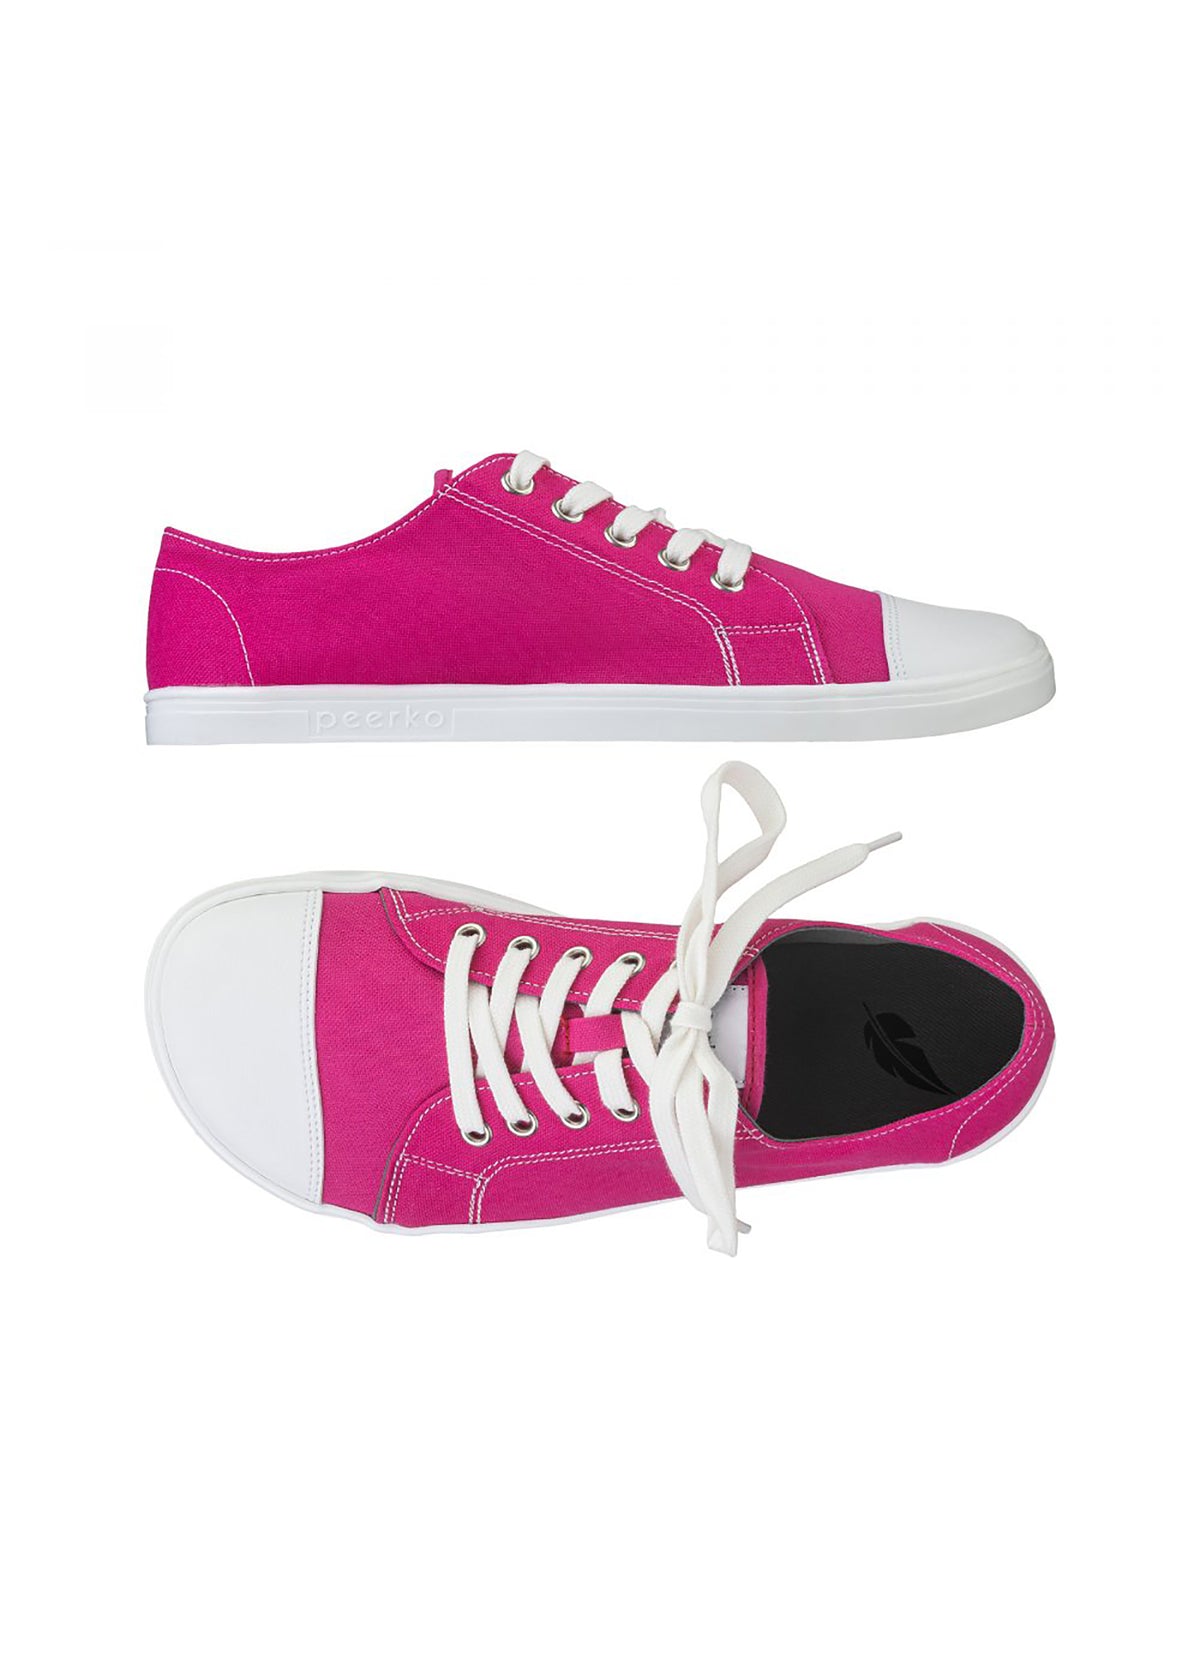 Barefoot shoes, Low-top sneakers - Origin Peony, pink fabric, vegan